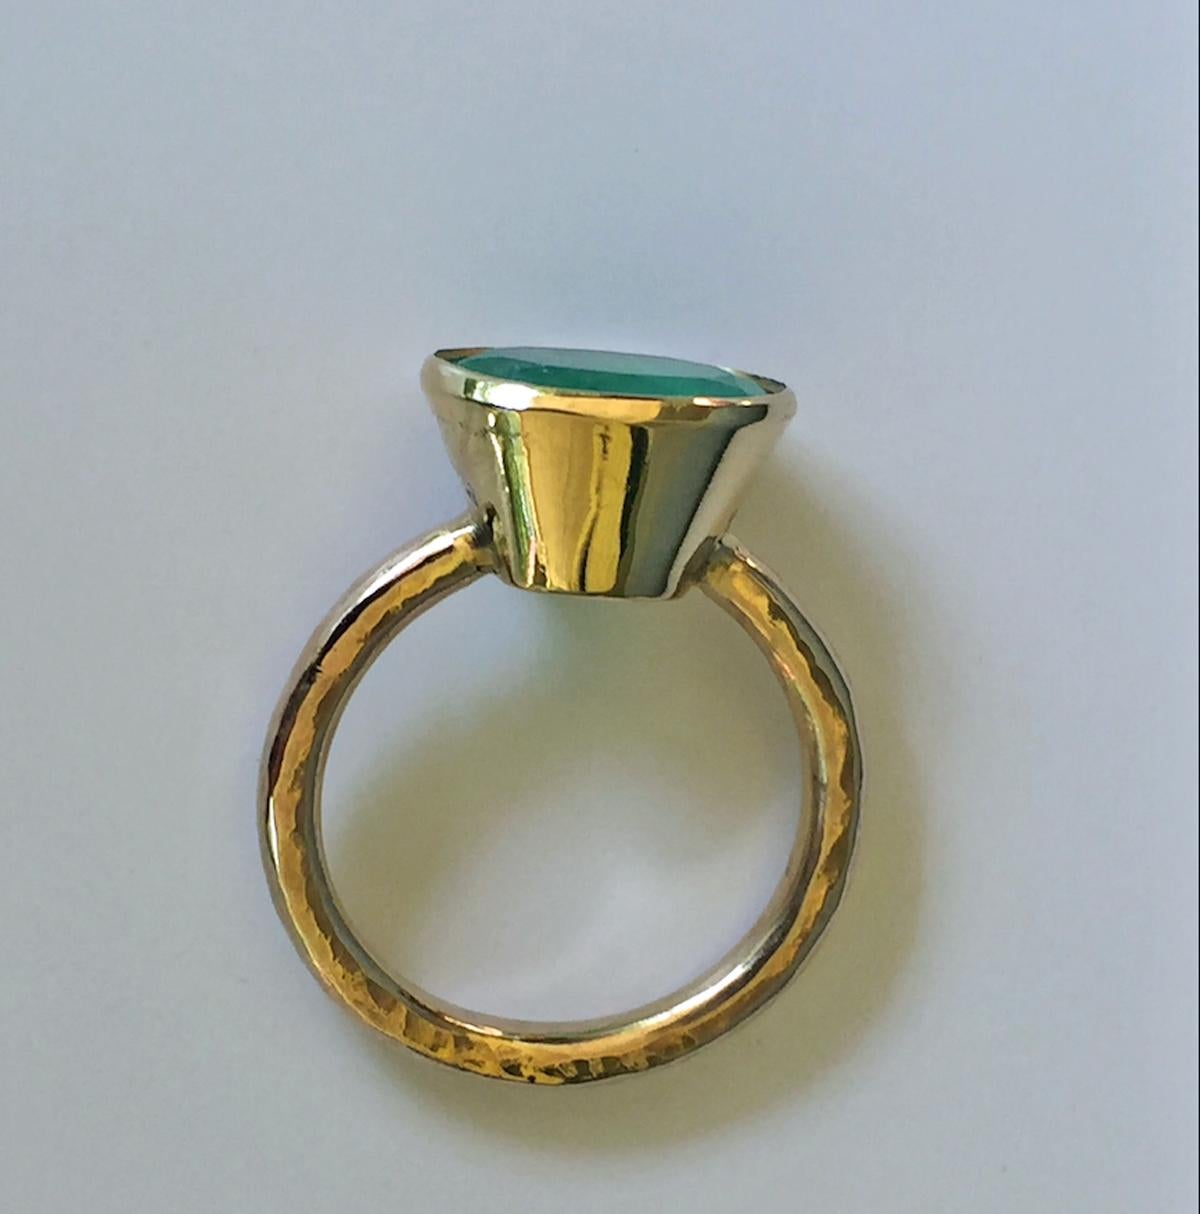 Rare Hammered Yellow Gold Emerald Ring Big 4.80 Carat Natural Colombian Emerald 3